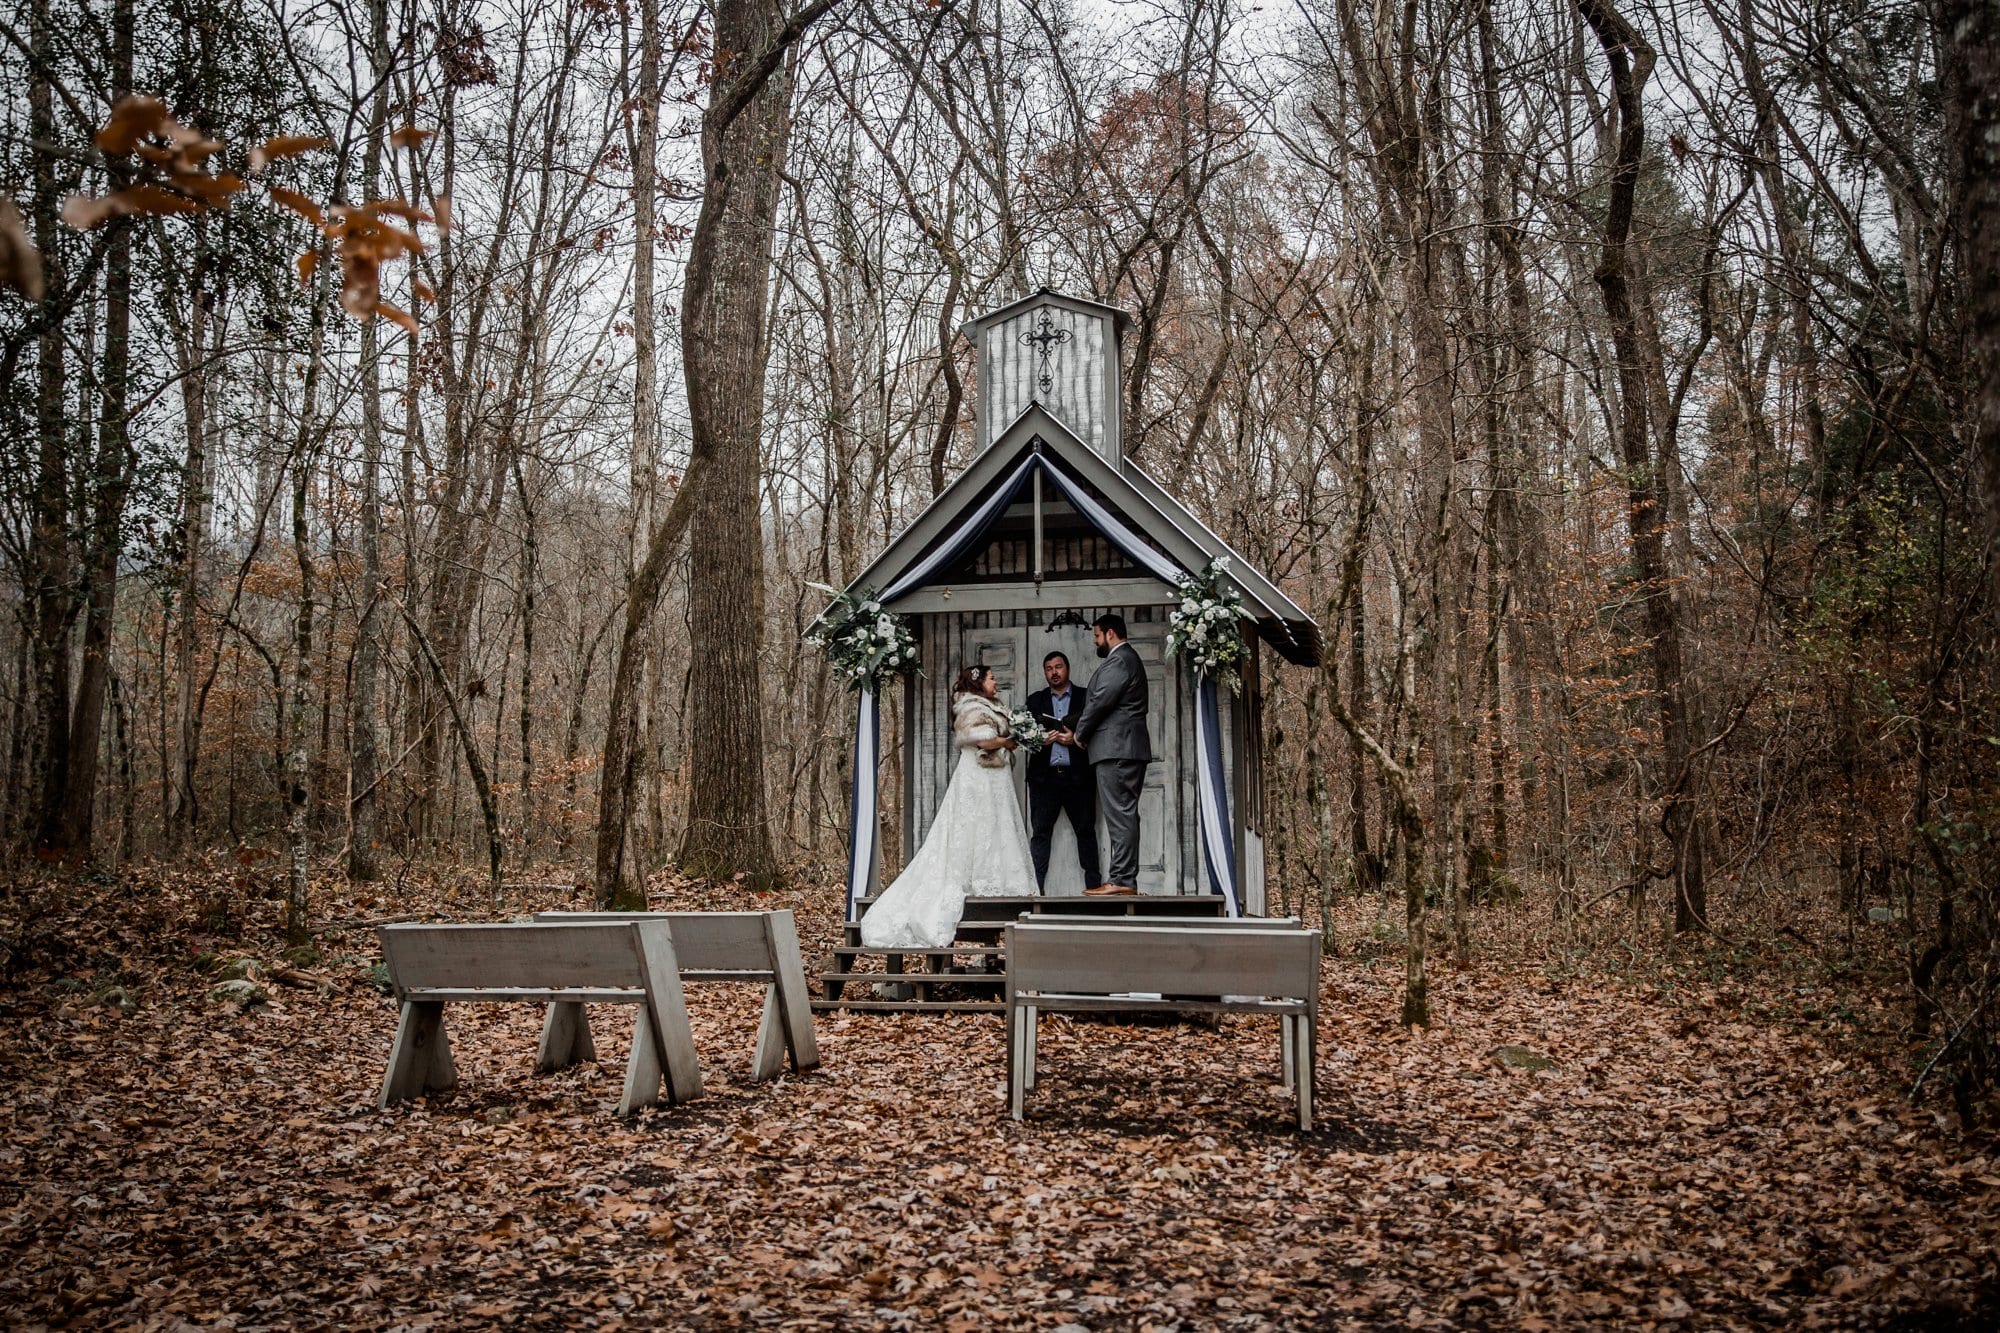 Wedding Chapels in the Smokey Mountains at a Smokey Mountain elopement.